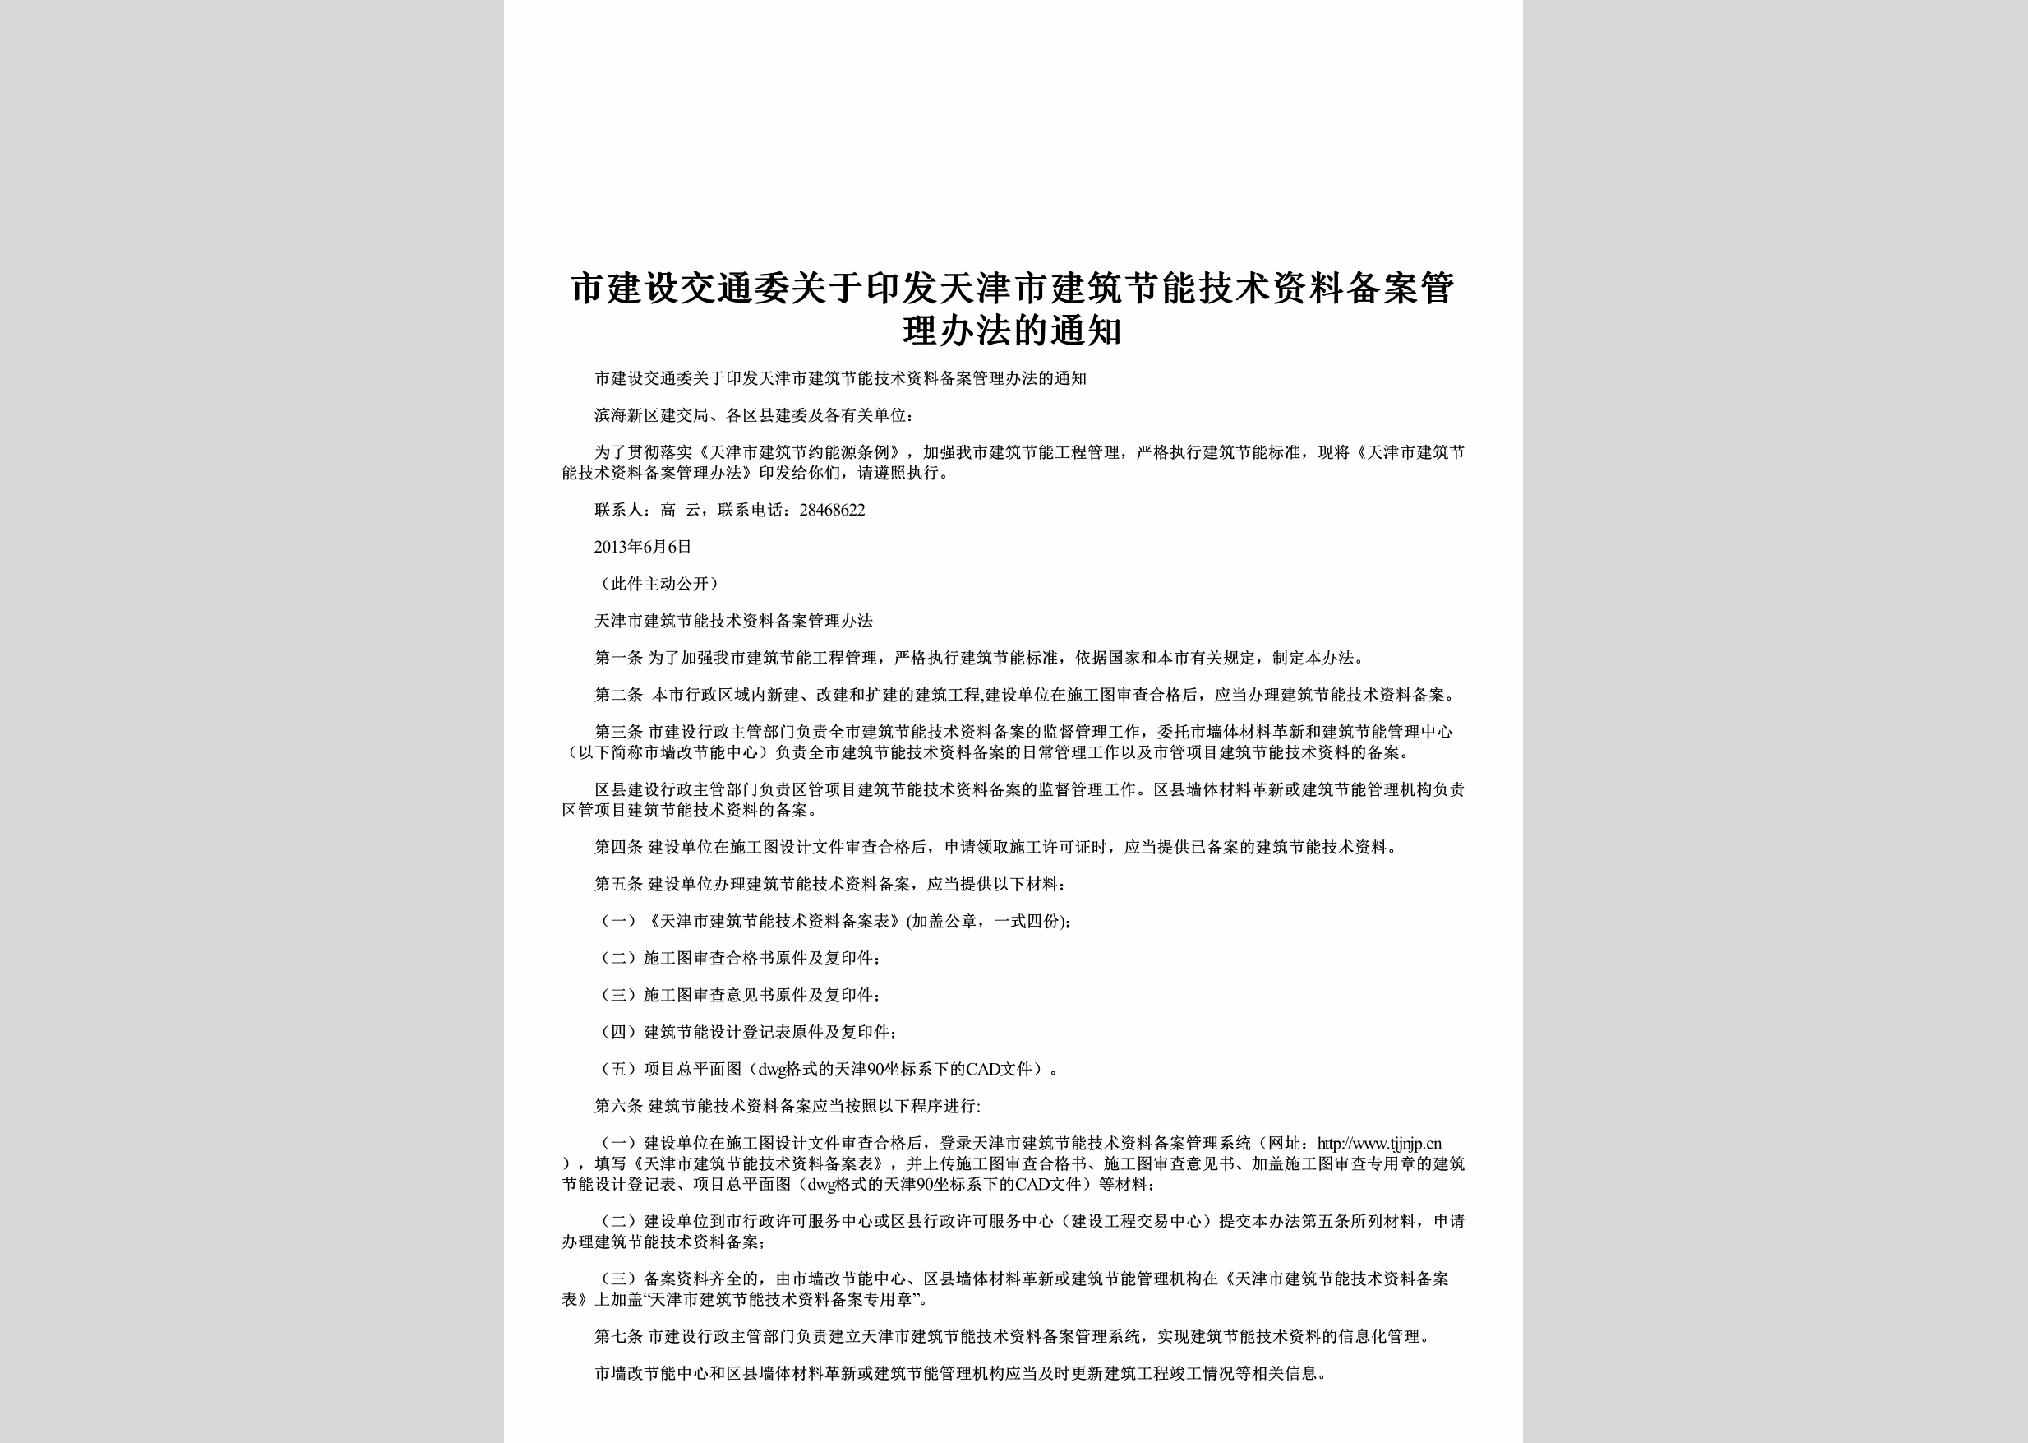 TJ-YYFTJSJZ-2013：于印发天津市建筑节能技术资料备案管理办法的通知